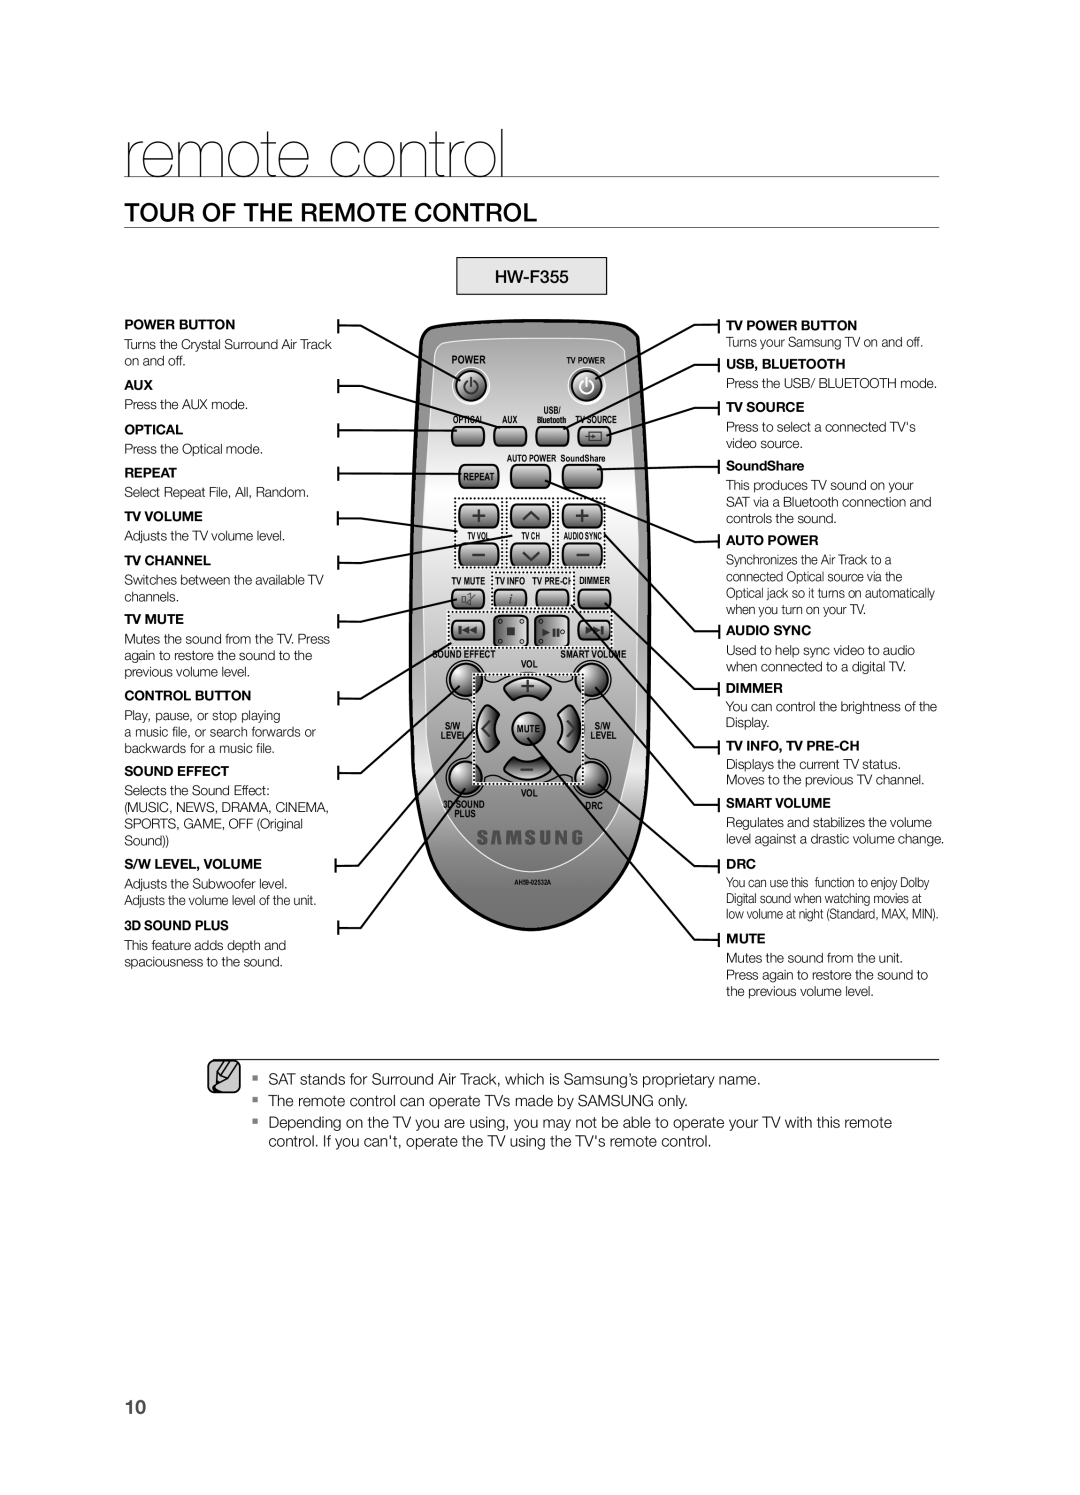 Samsung HW-F355, HWF355ZA user manual remote control, Tour of the Remote Control 